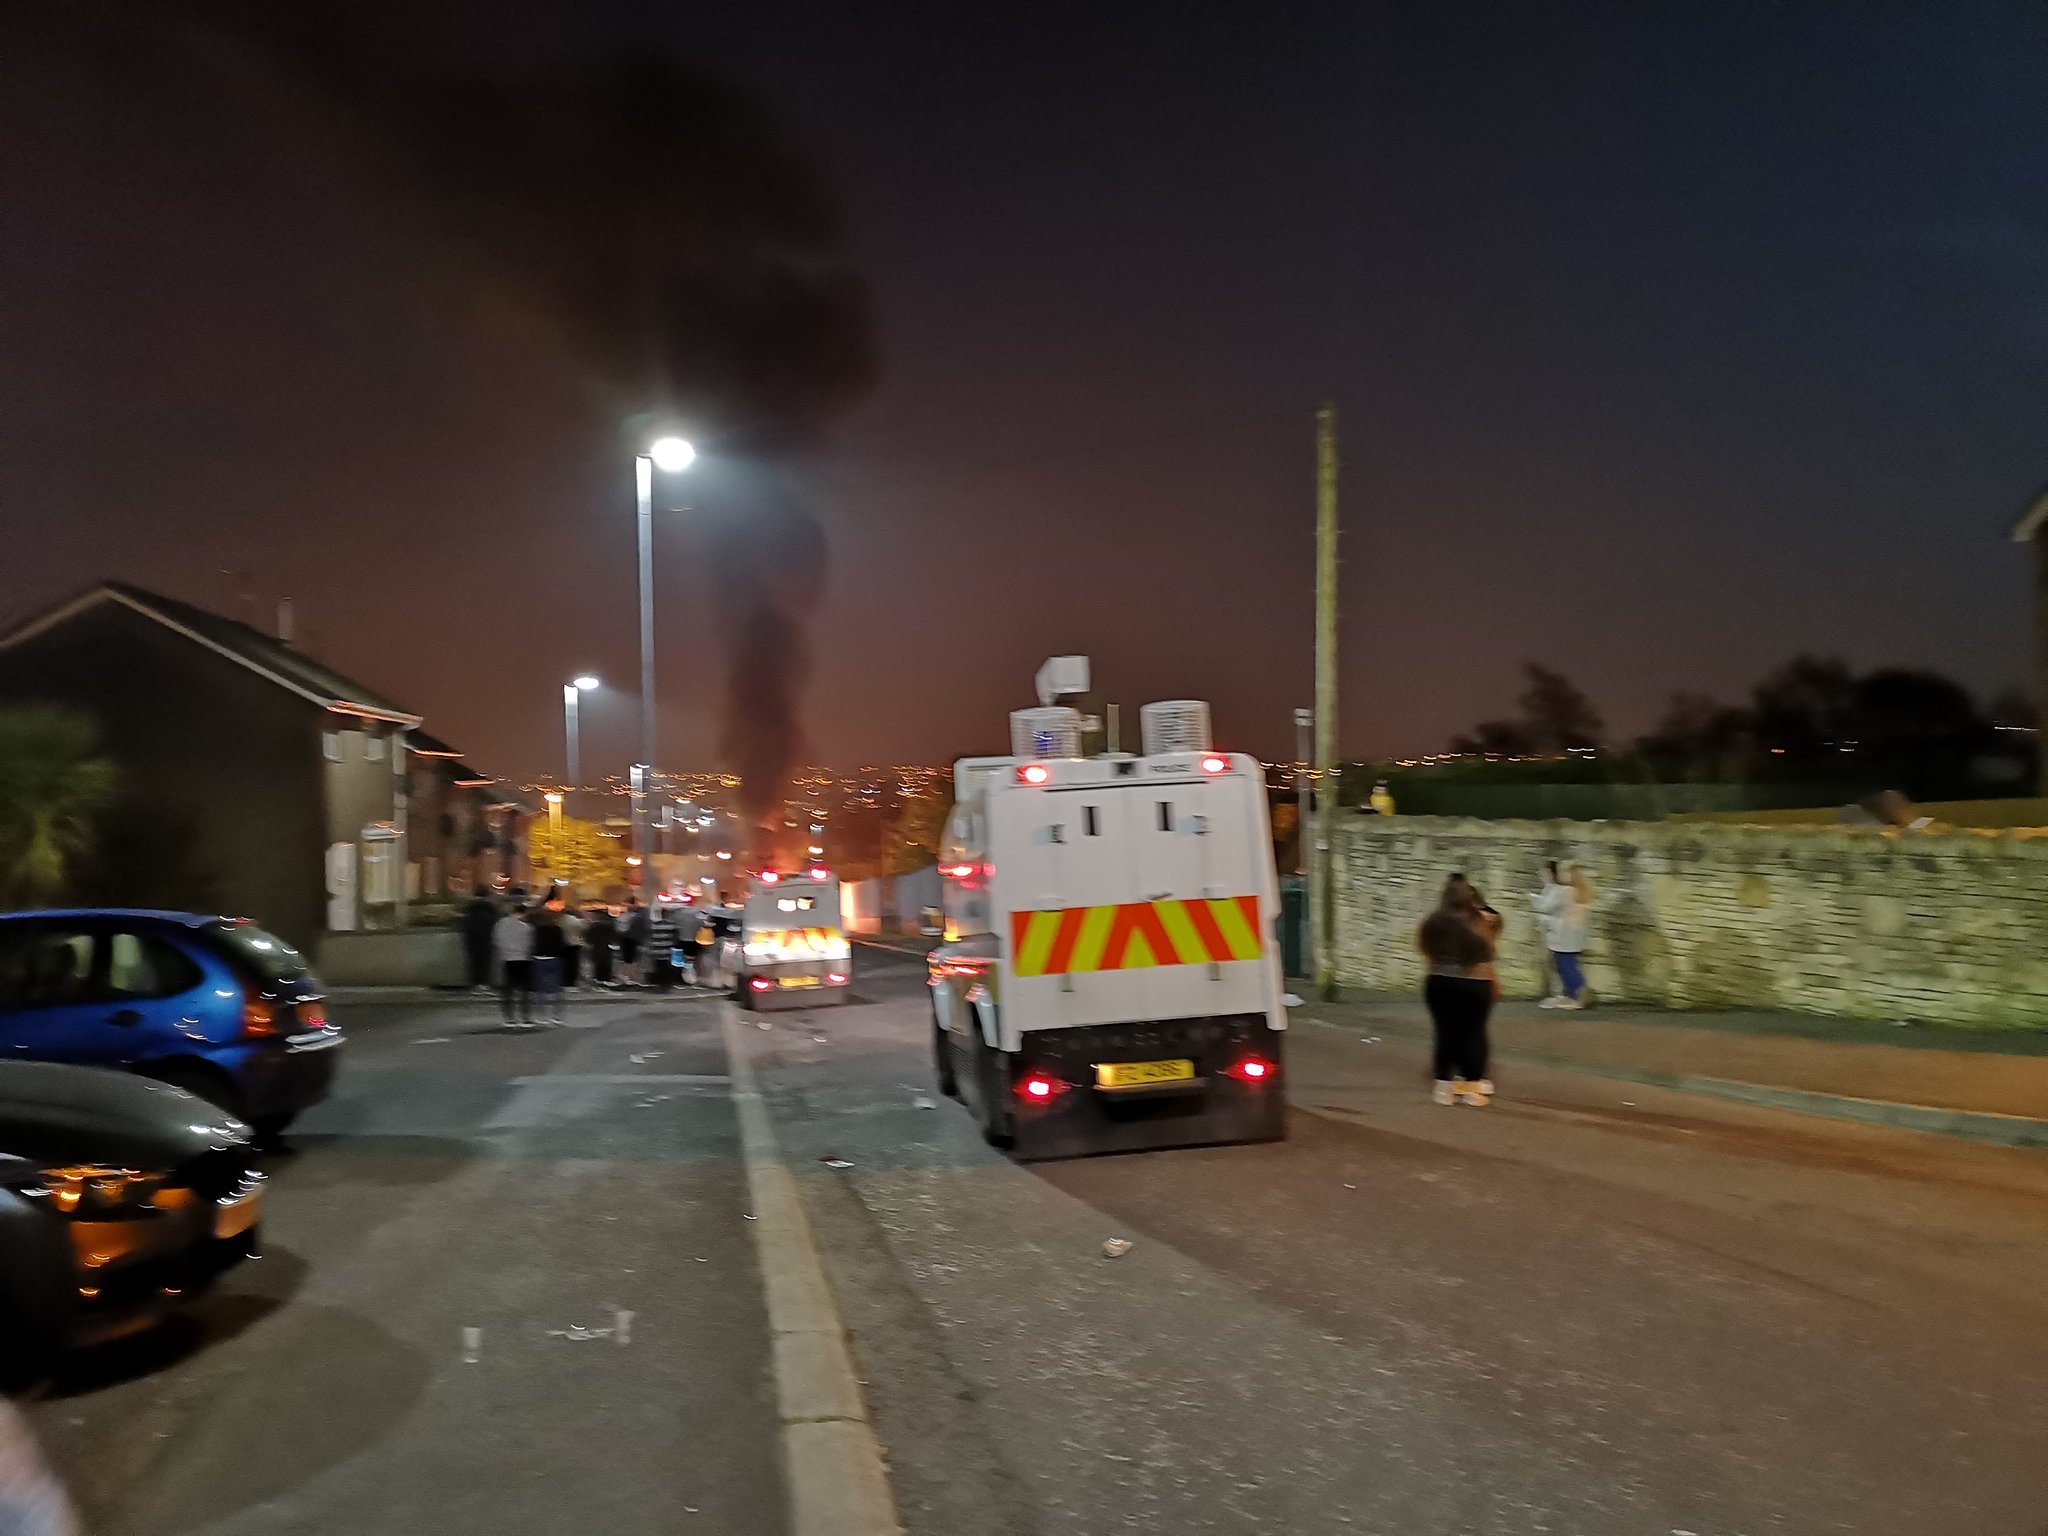 Journalist shot dead during rioting in Derry